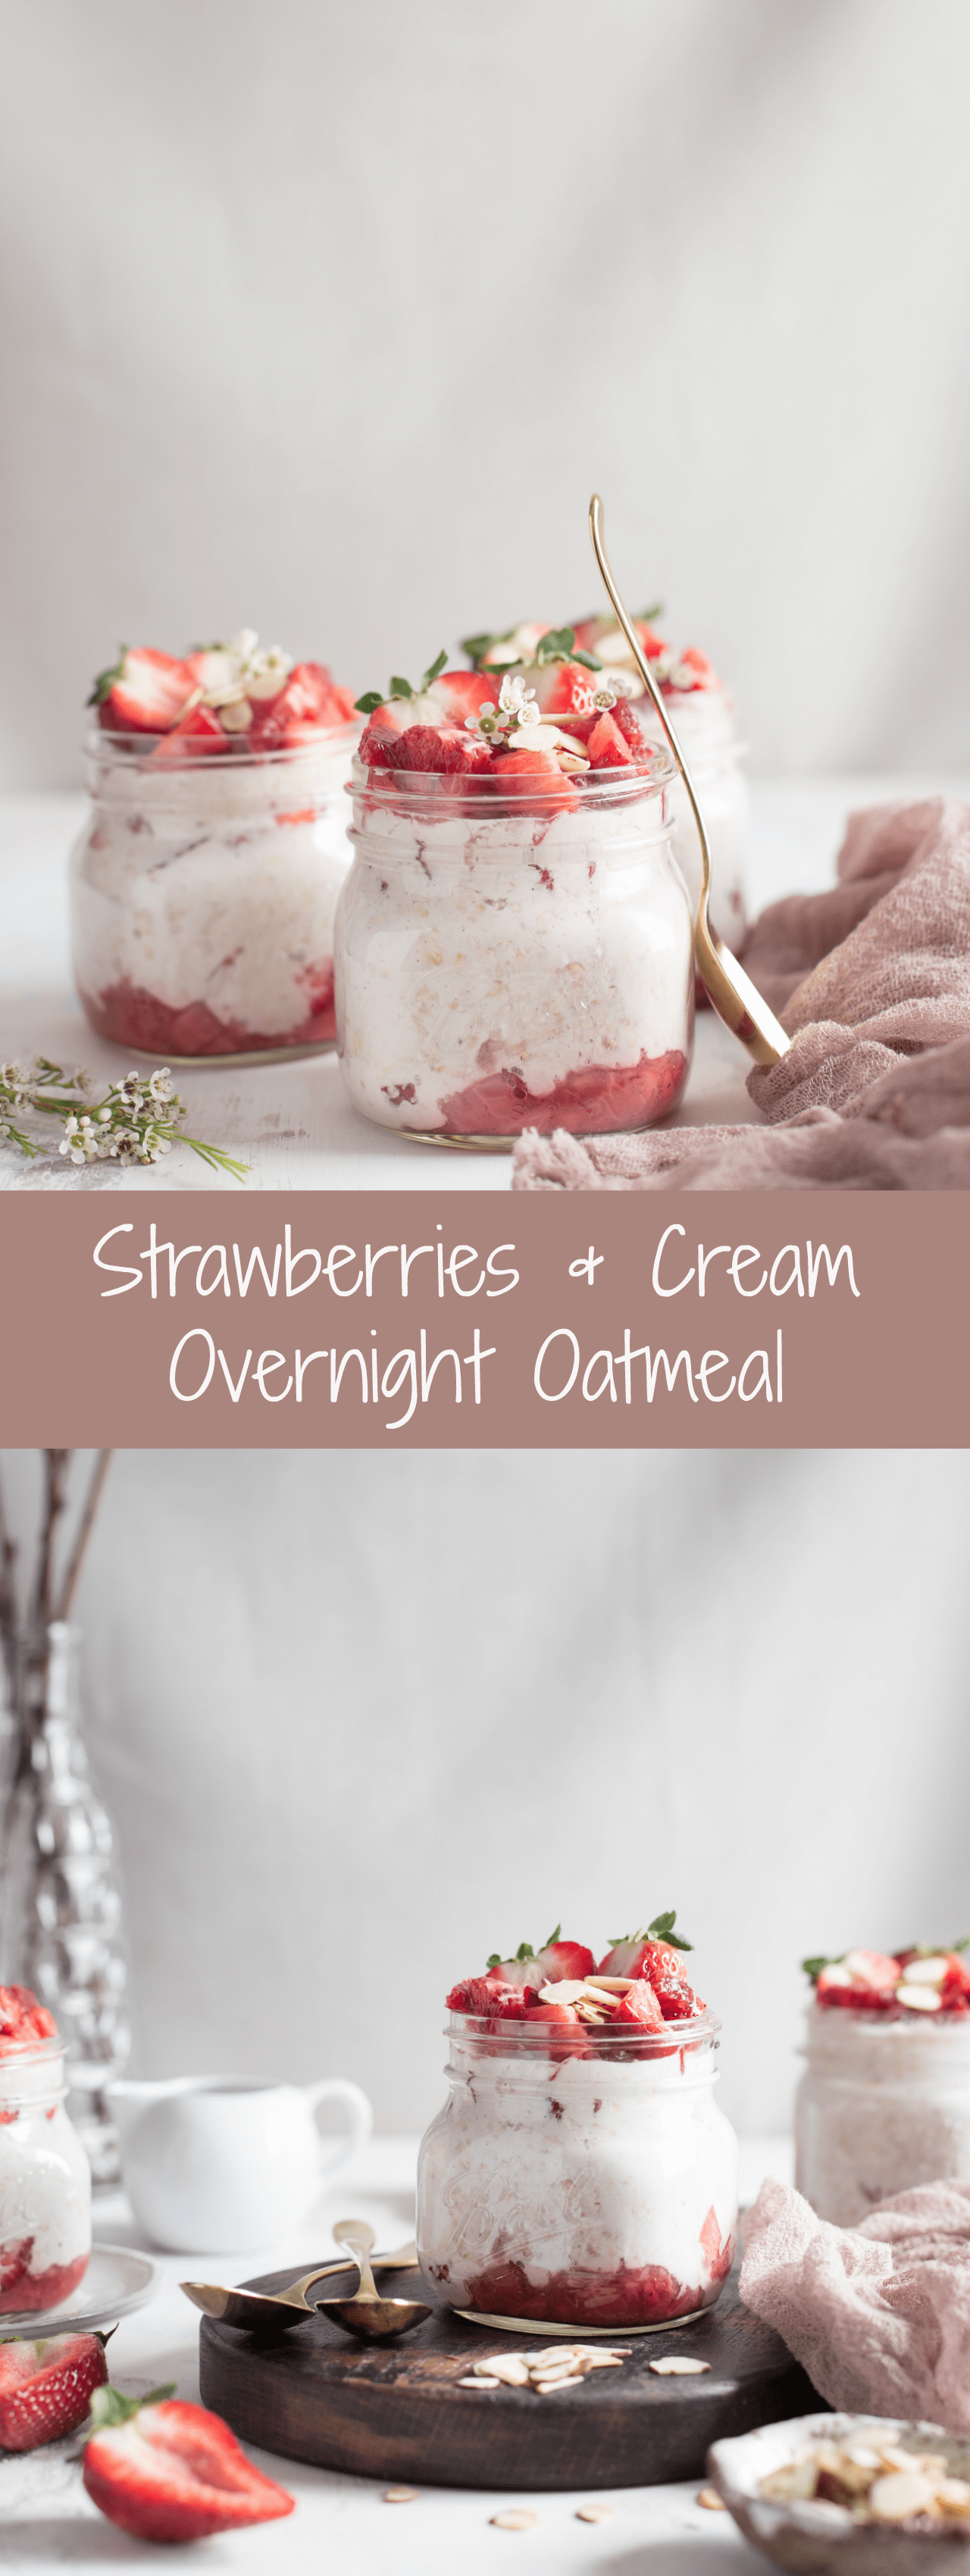 Strawberries and Cream Overnight Oatmeal {Gluten-Free + Vegan Option)